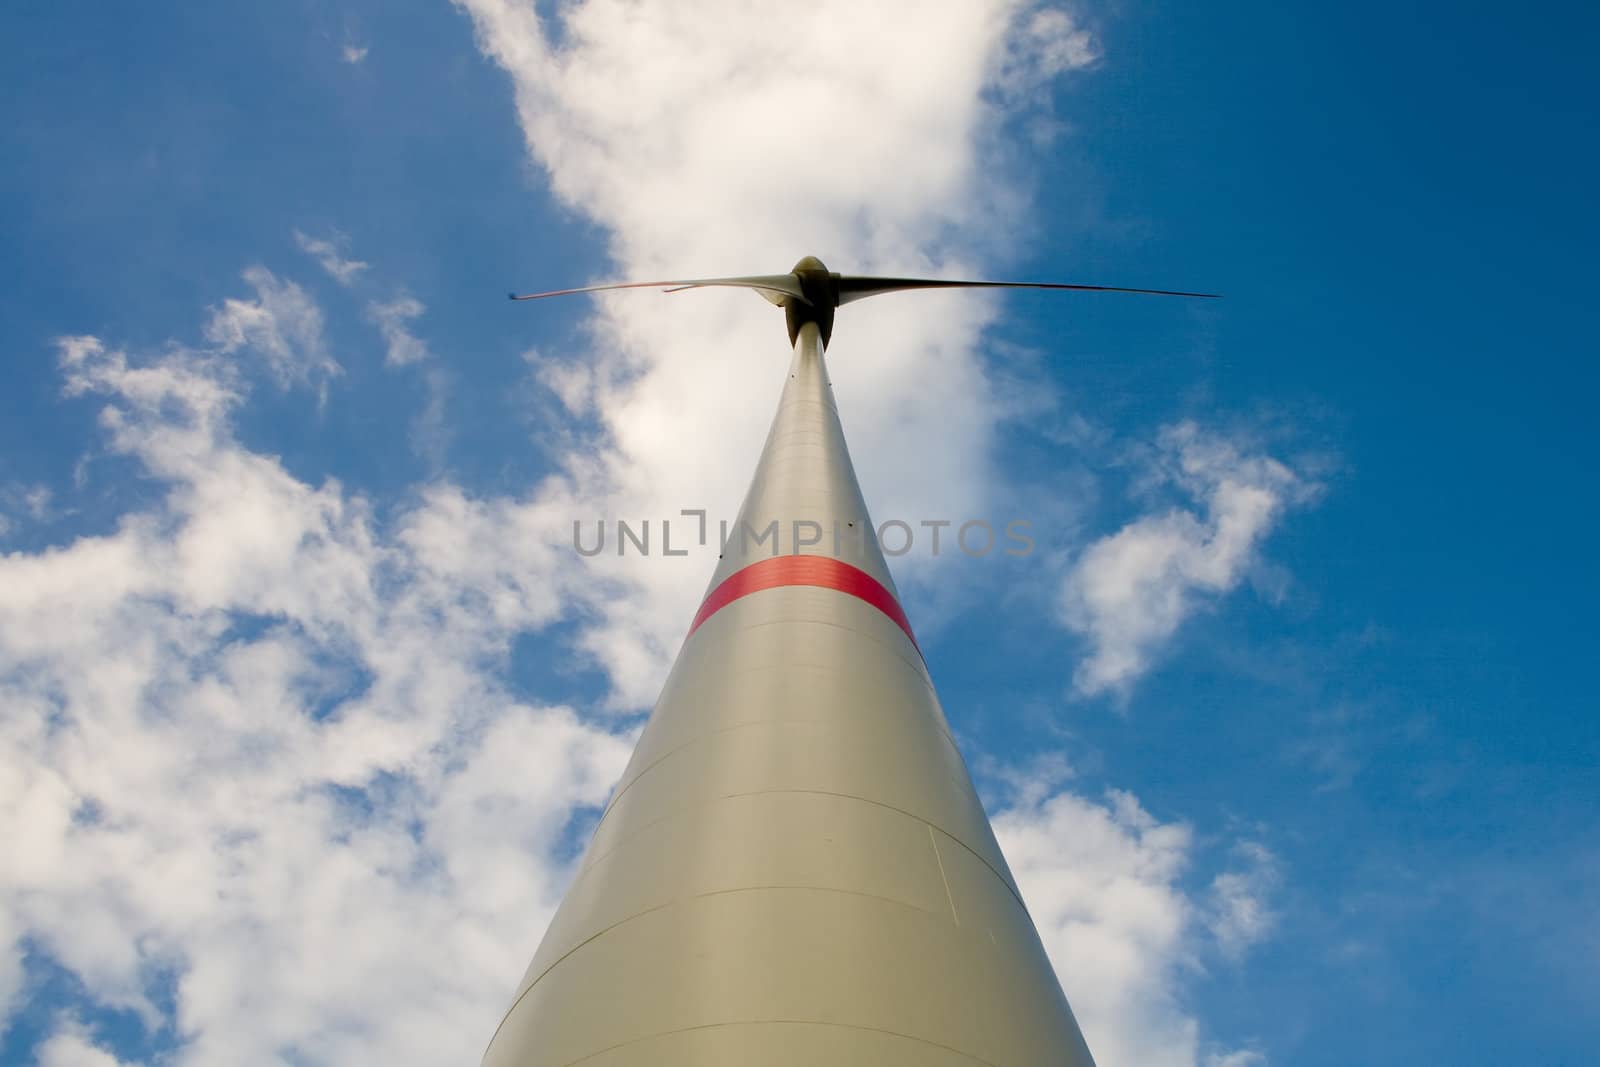 Wind turbine, a bottom view by Nickondr